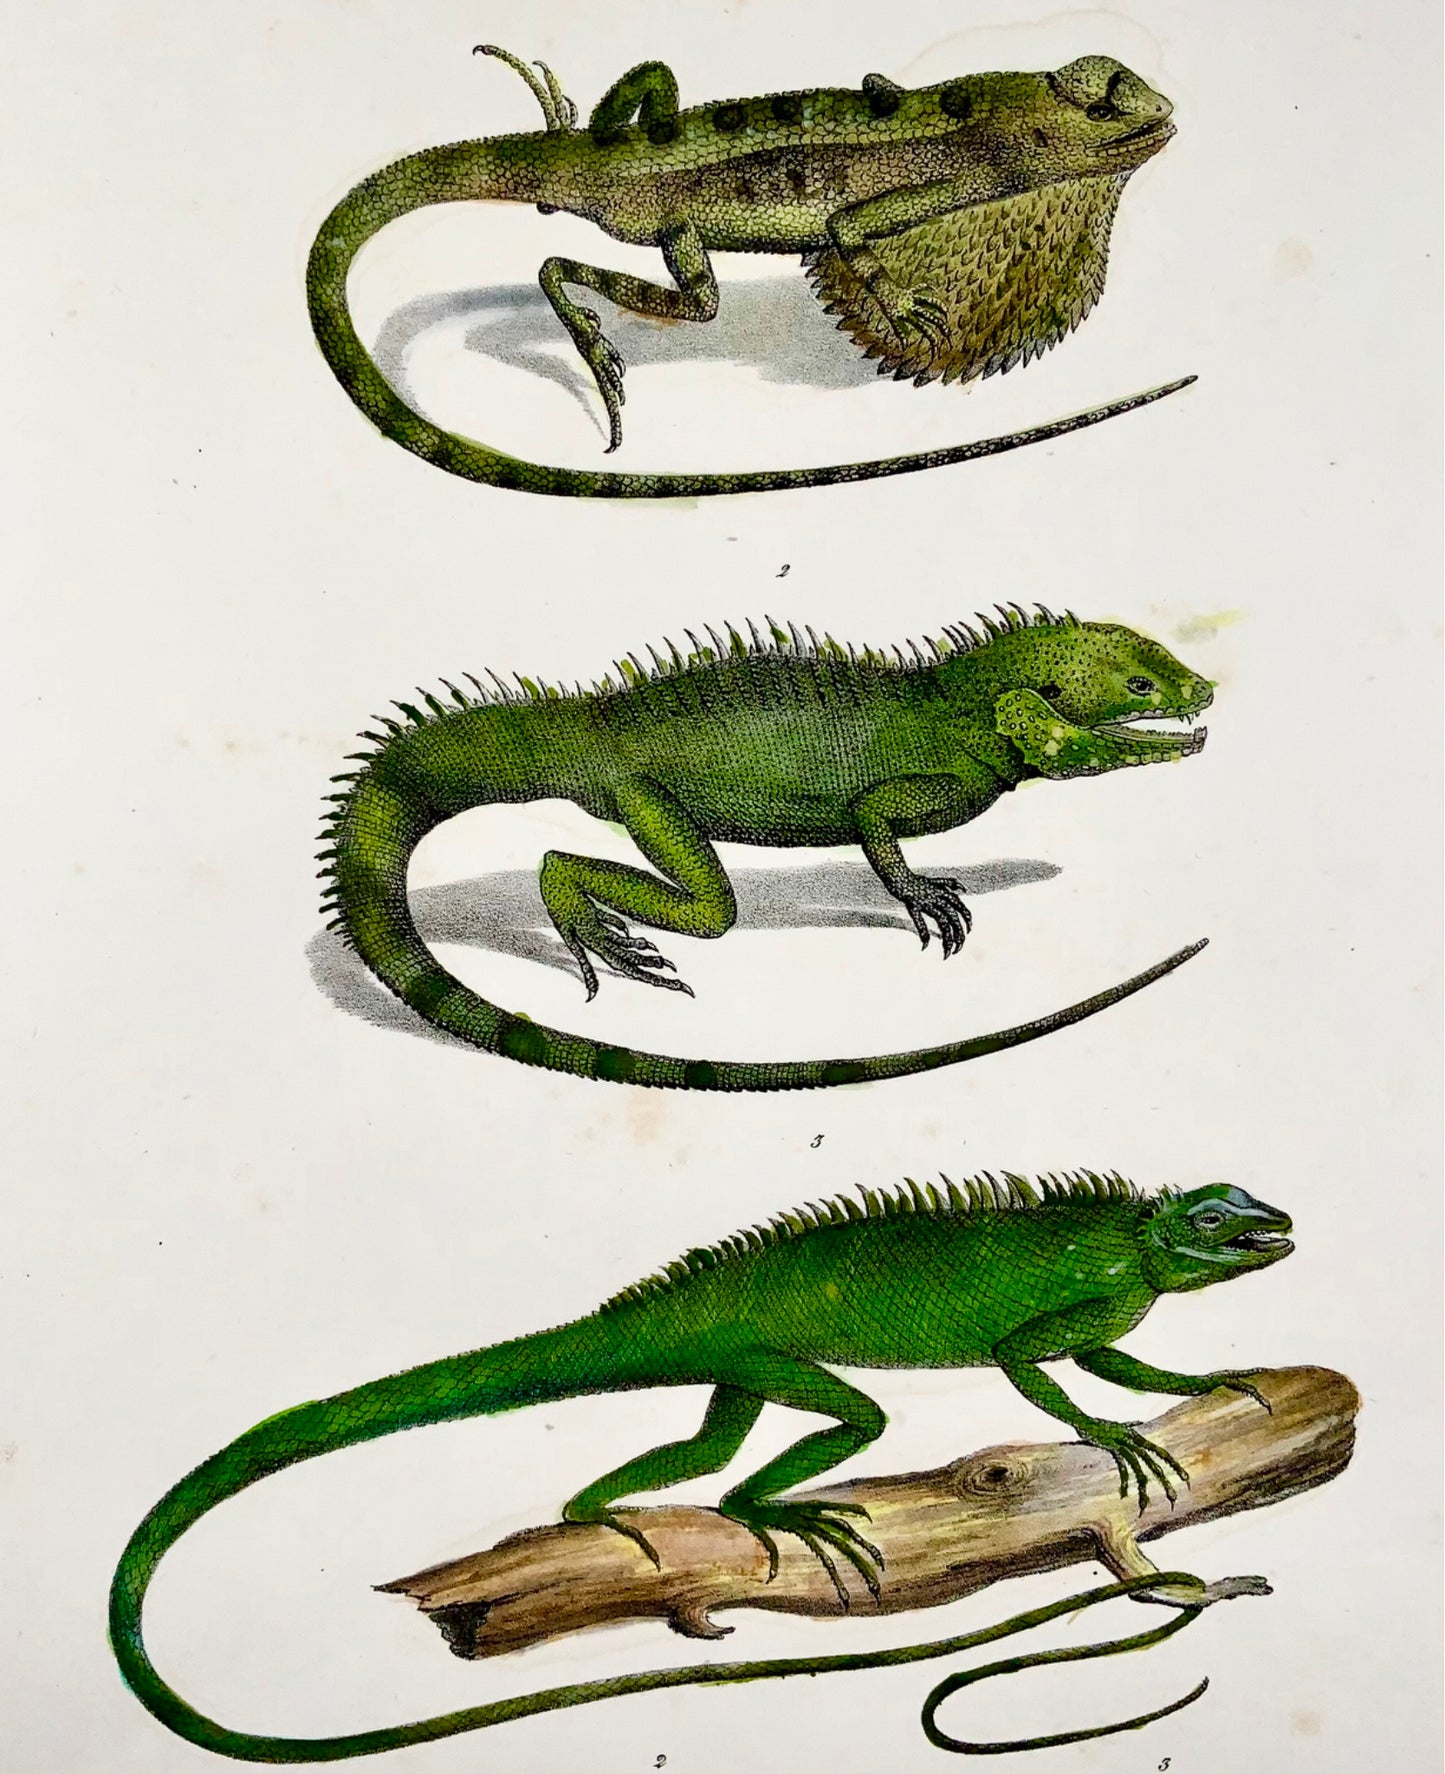 1833 H.R. Schinz (b1777) SITANA Dragon Lizards - Hand coloured stone lithograph - Reptiles